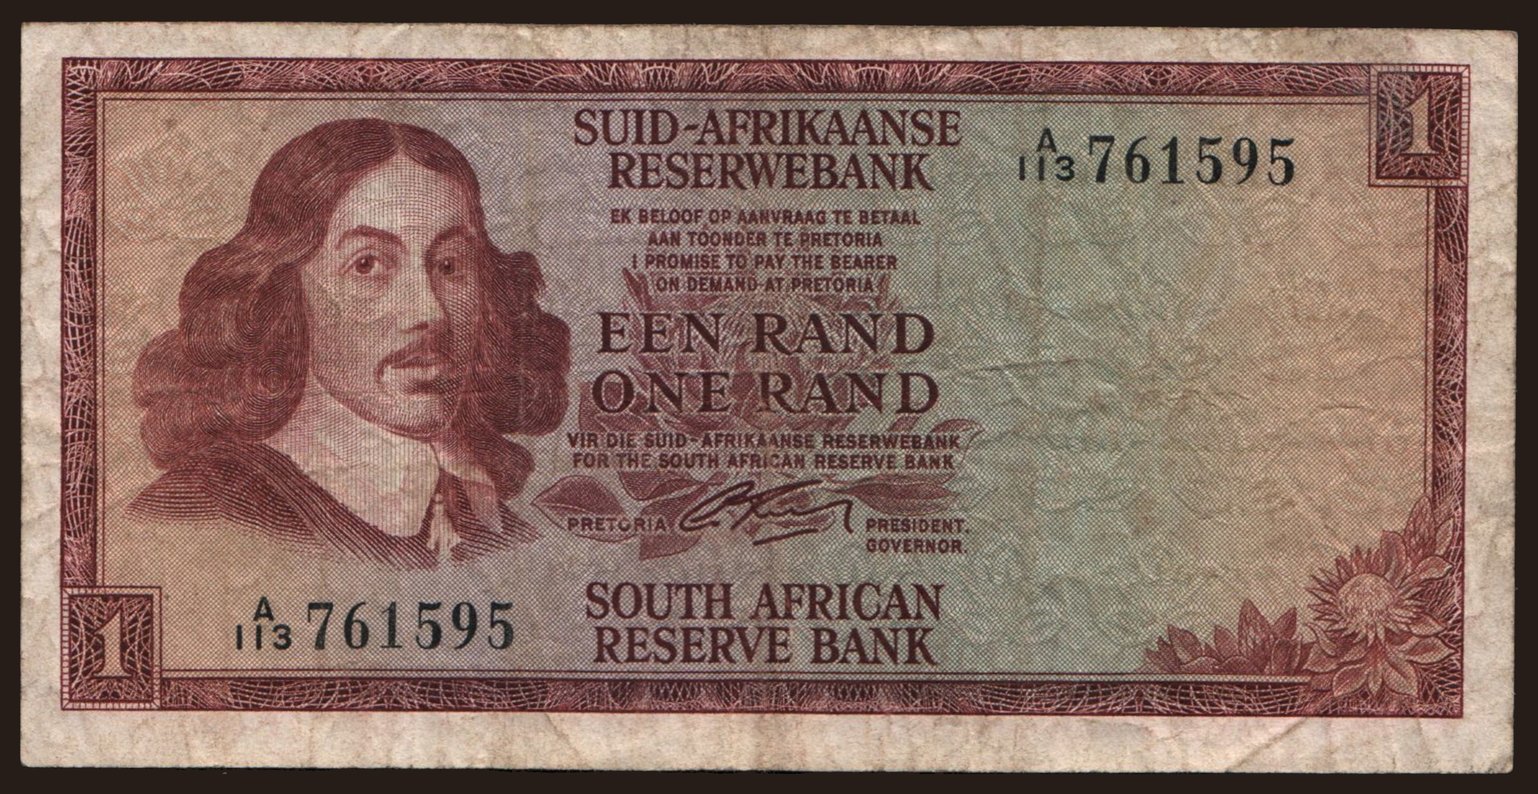 1 rand, 1966